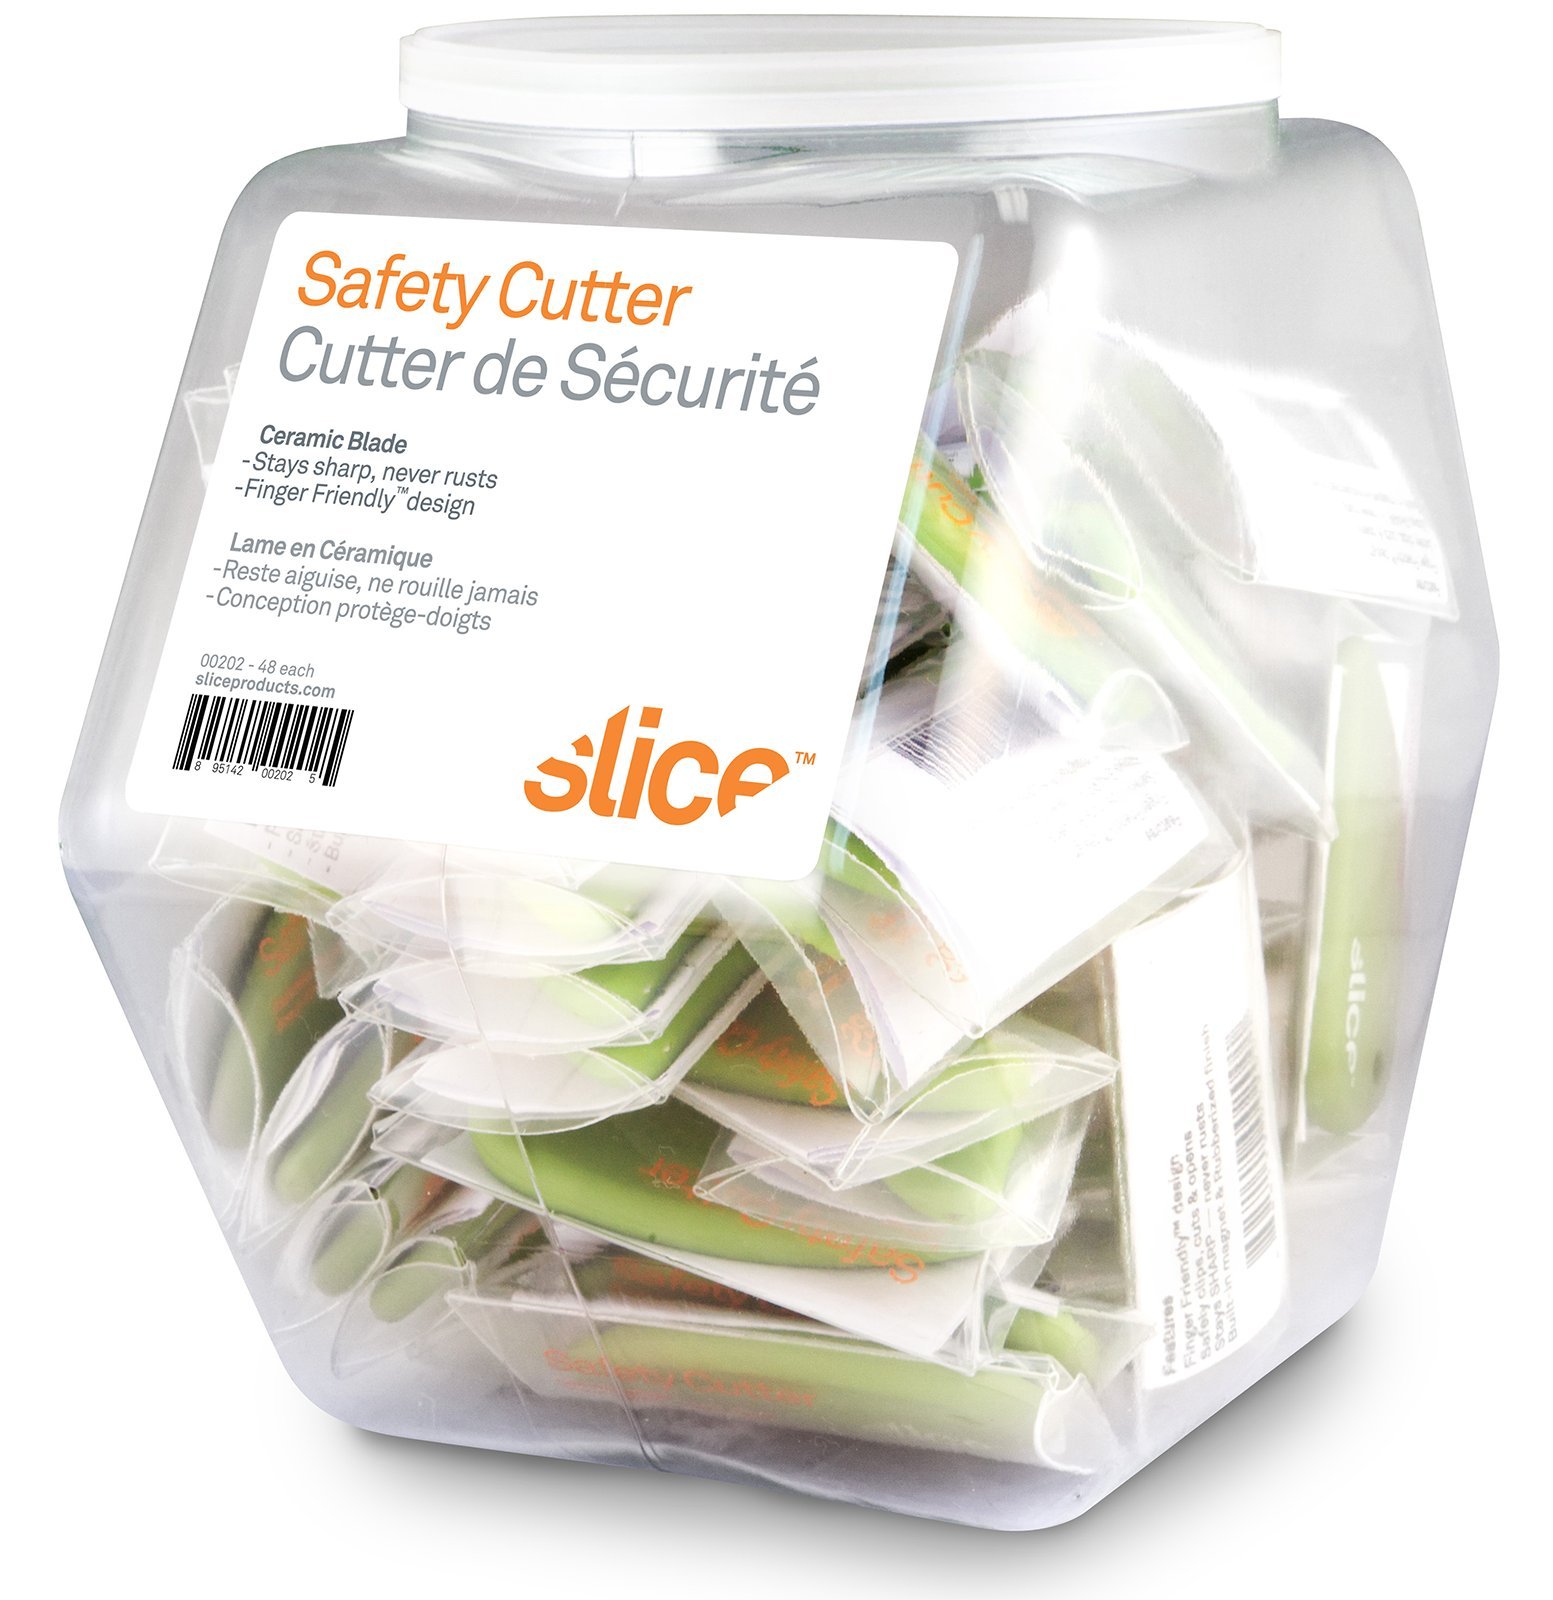 Slice Micro Ceramic Blade, Safety Cutter.